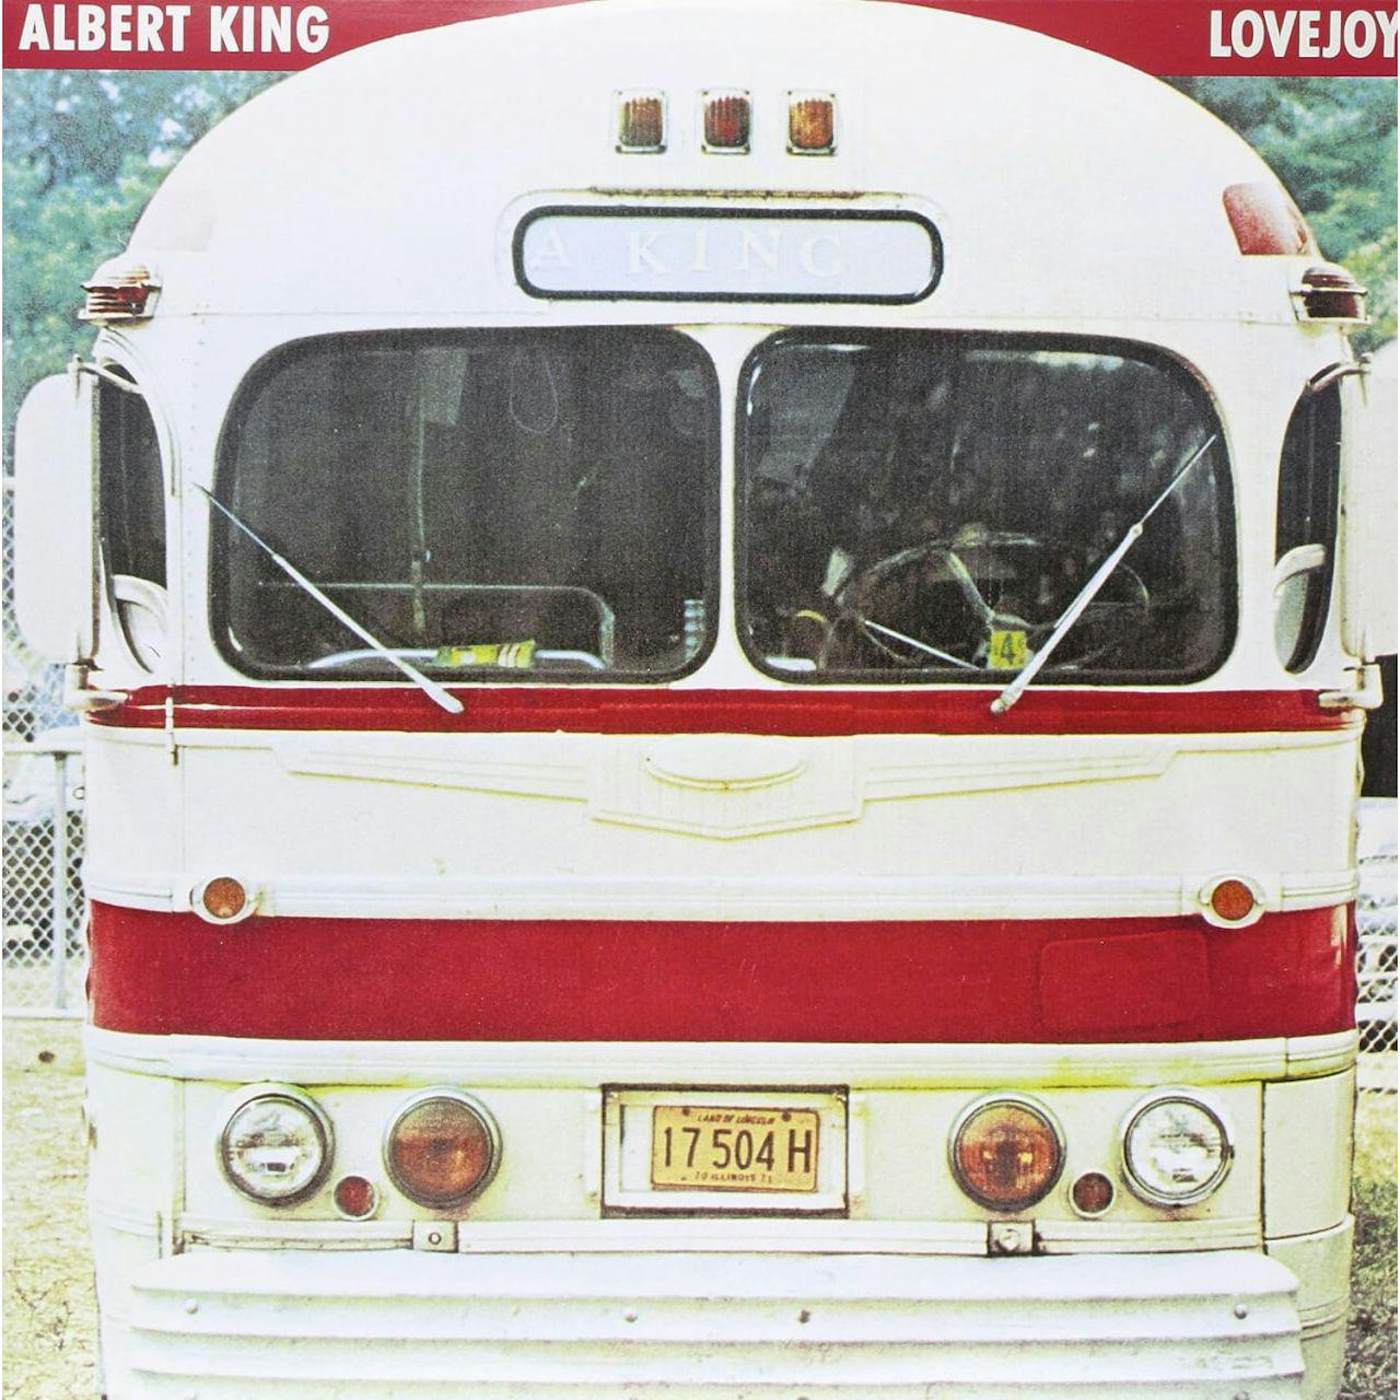 Albert King LOVEJOY Vinyl Record